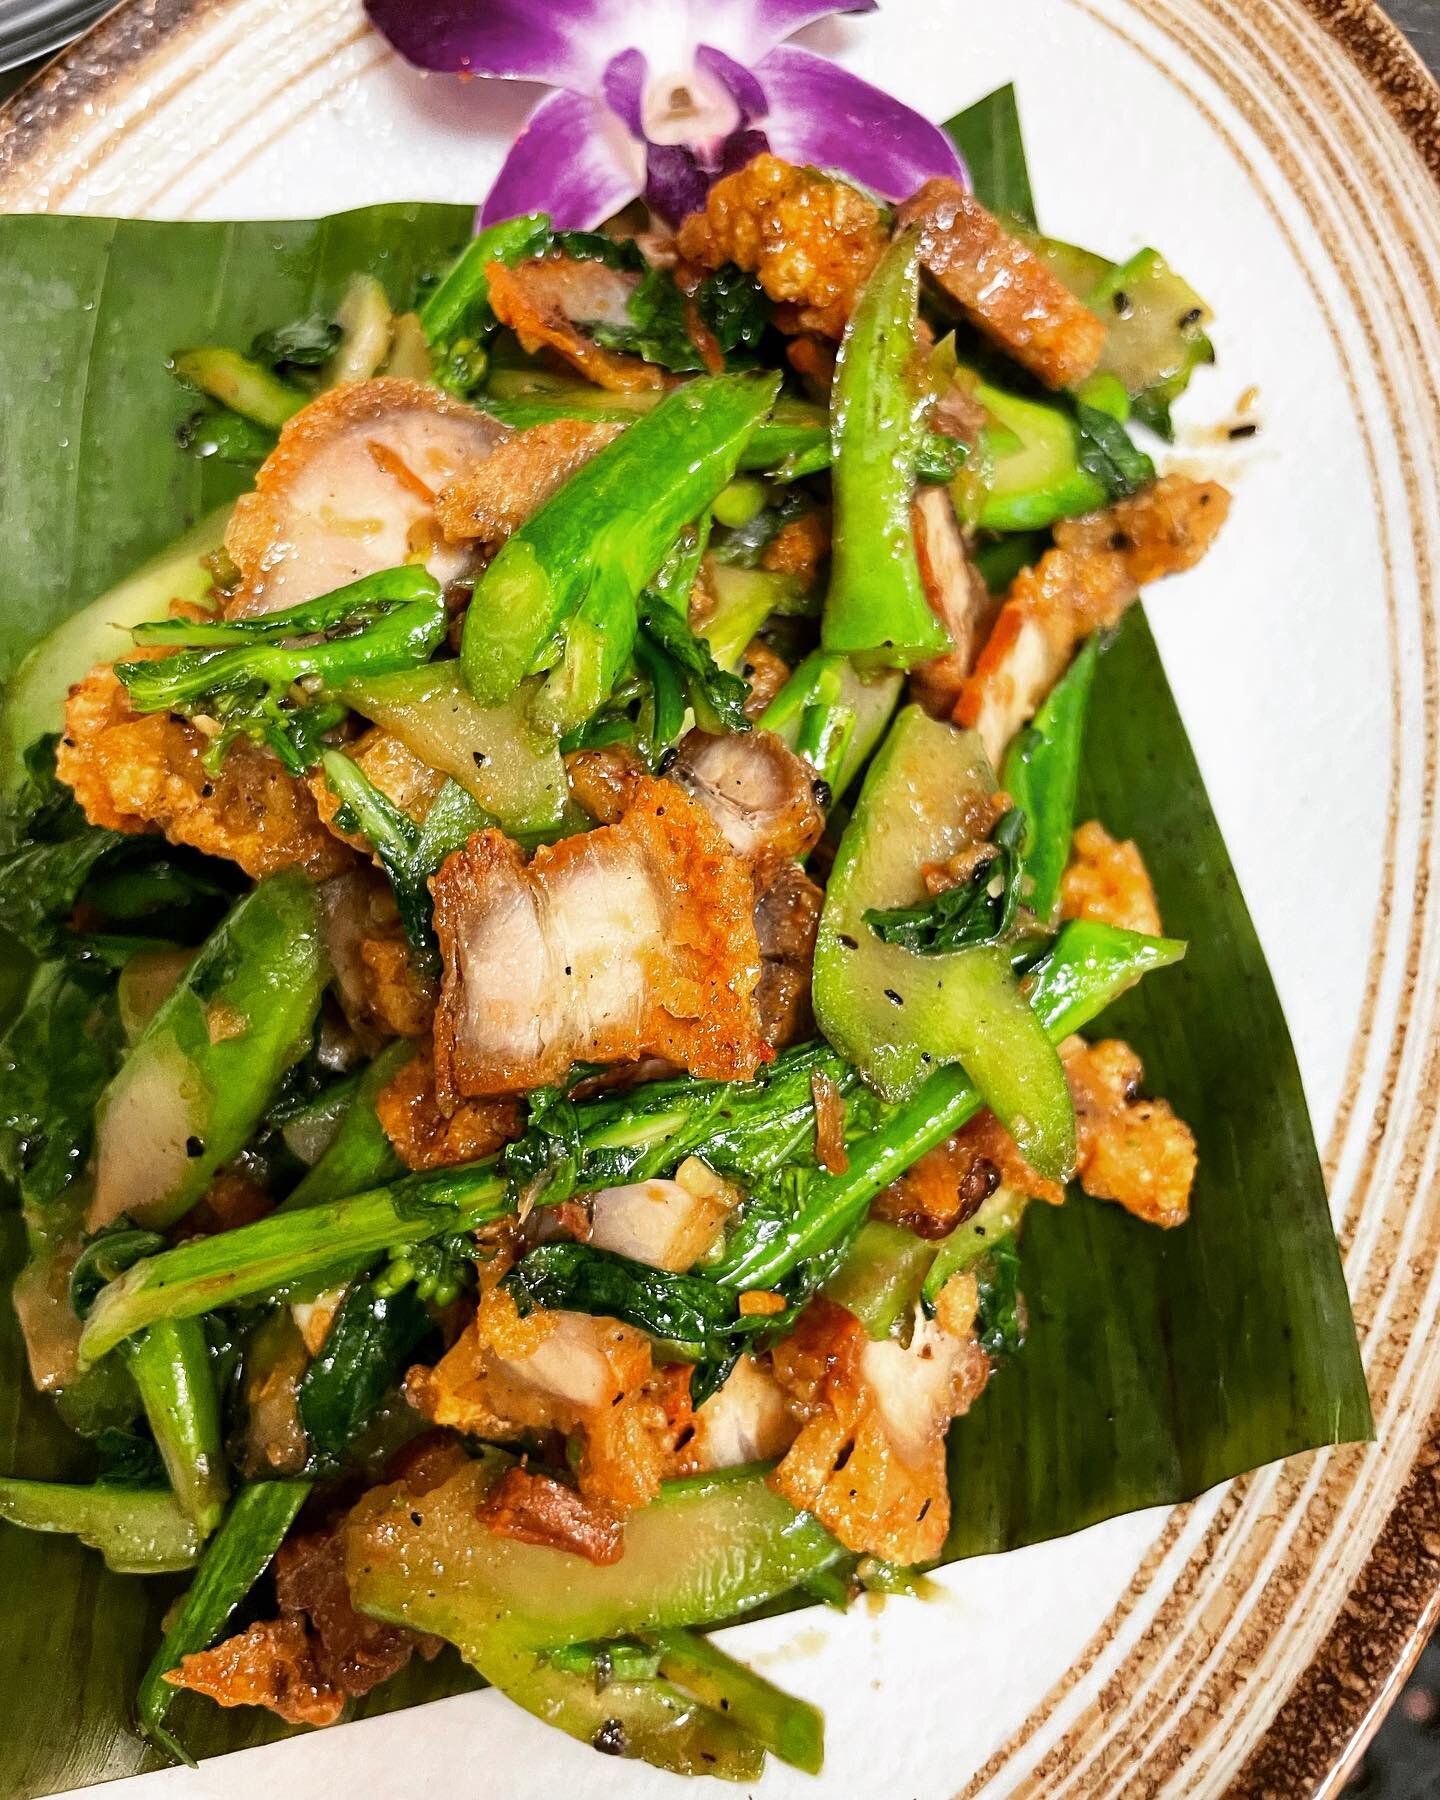 We will fill your belly with Crispy Pork Belly 🫰🏼 &ldquo;ka na moo krob&rdquo; 

📍Lan Larb Chiangmai 

#lanlarbchiangmai 
☎️ (646) 895-9264
📍227 Centre st. NY
⏰11:30AM-10:00PM

#soho #thaifoodisthebest #bestthaifood #chiangmai #thaistreetfood #ny